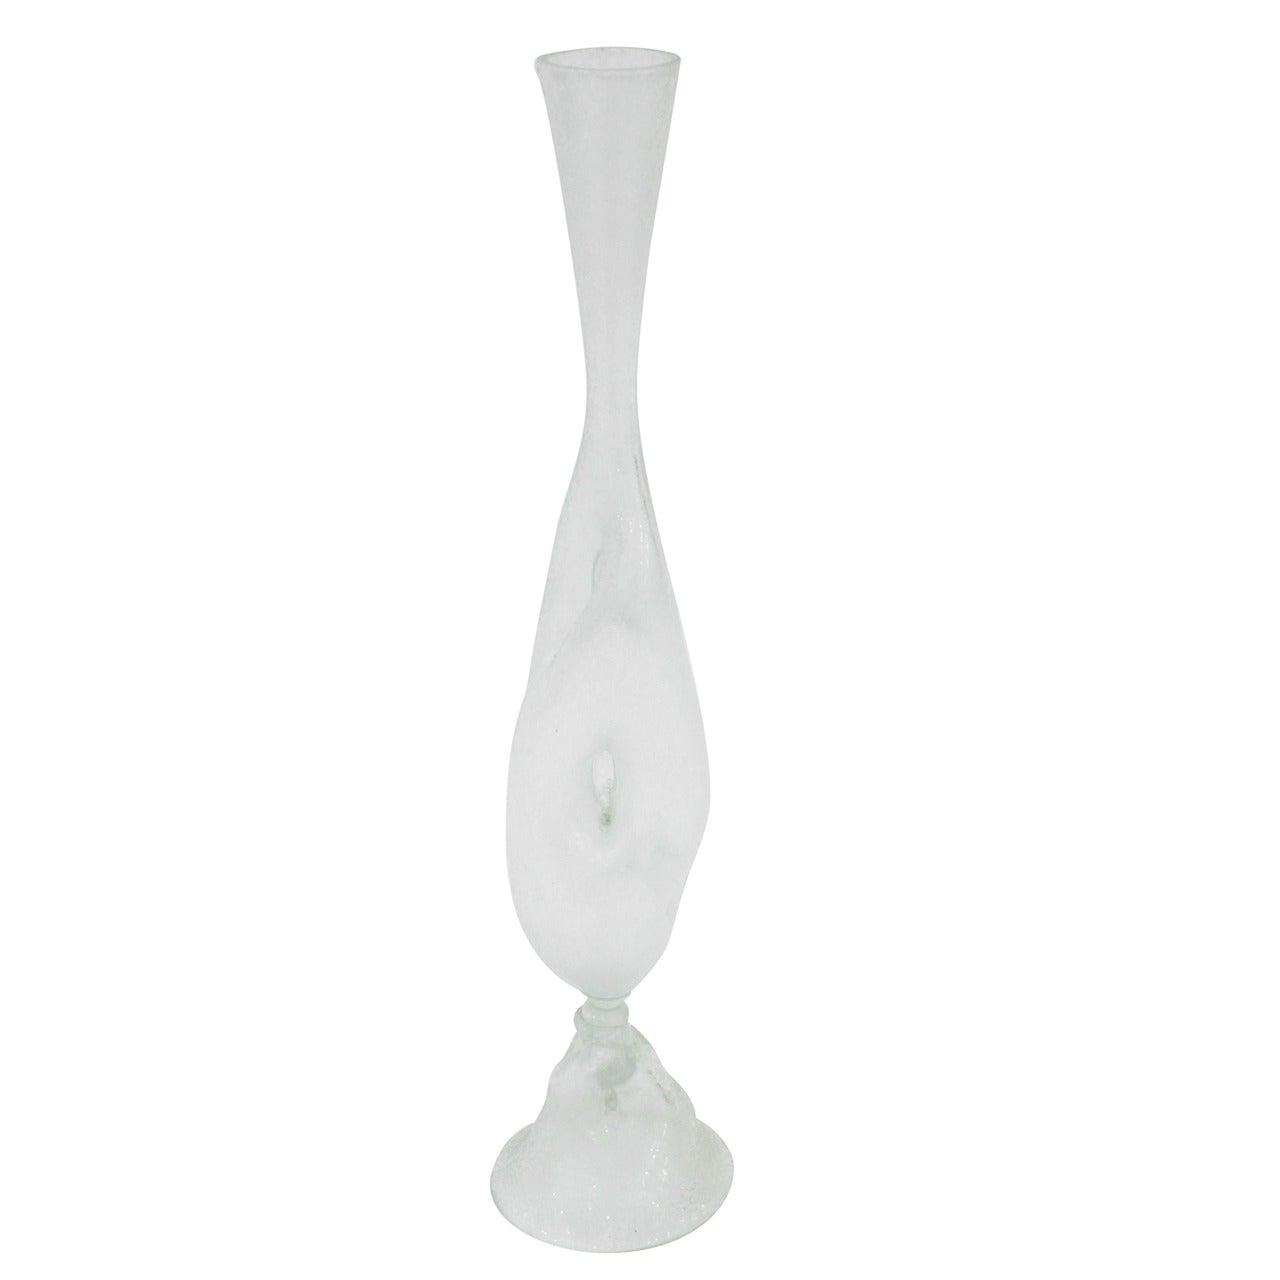 Unique Hand-Blown Vase in Iridized Cristallo Glass by Anzolo Fuga For Sale